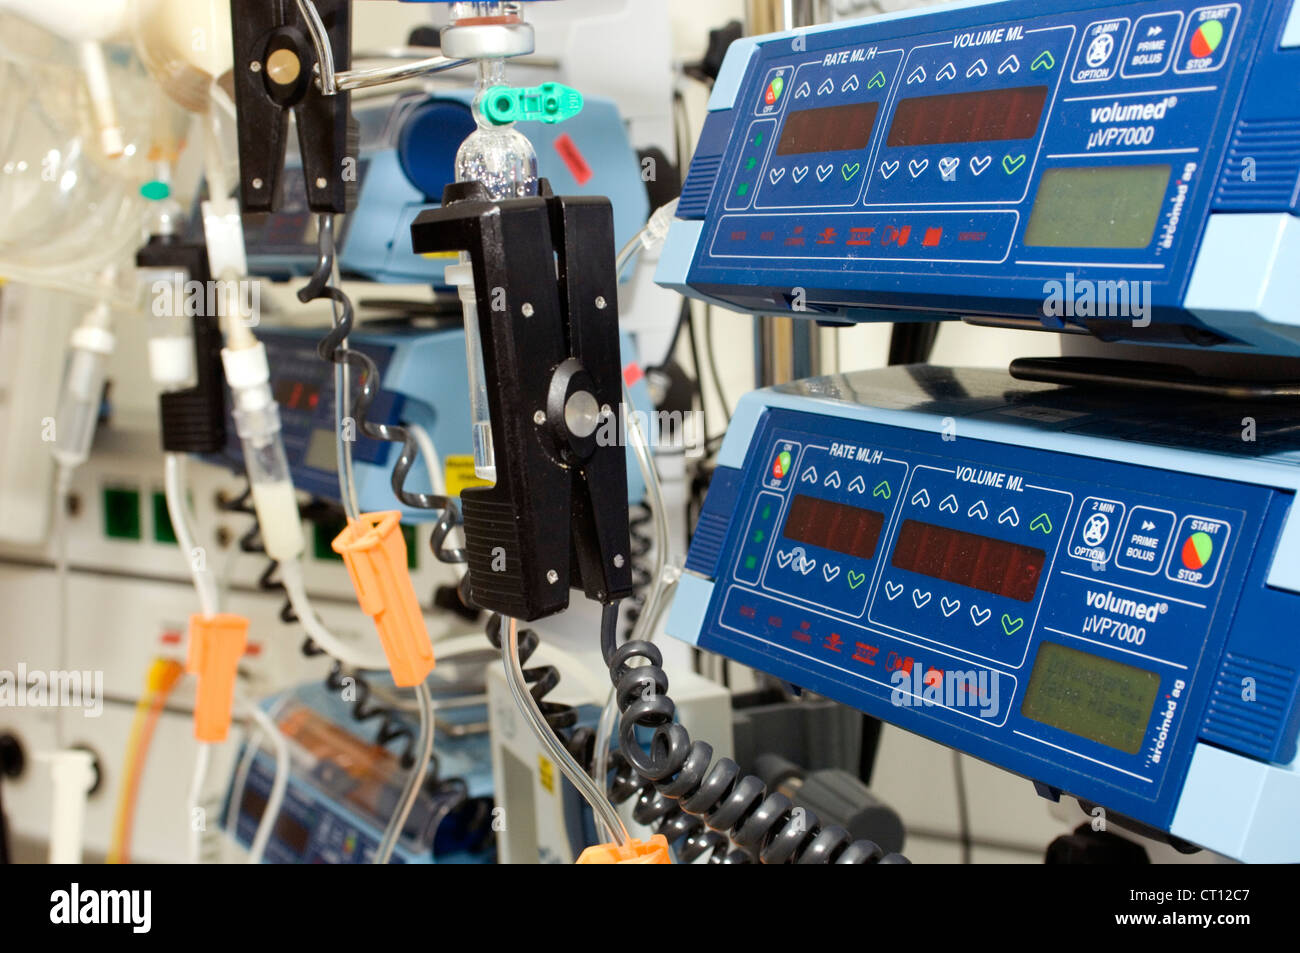 Patient monitoring equipment for endoscopic procedures. Stock Photo